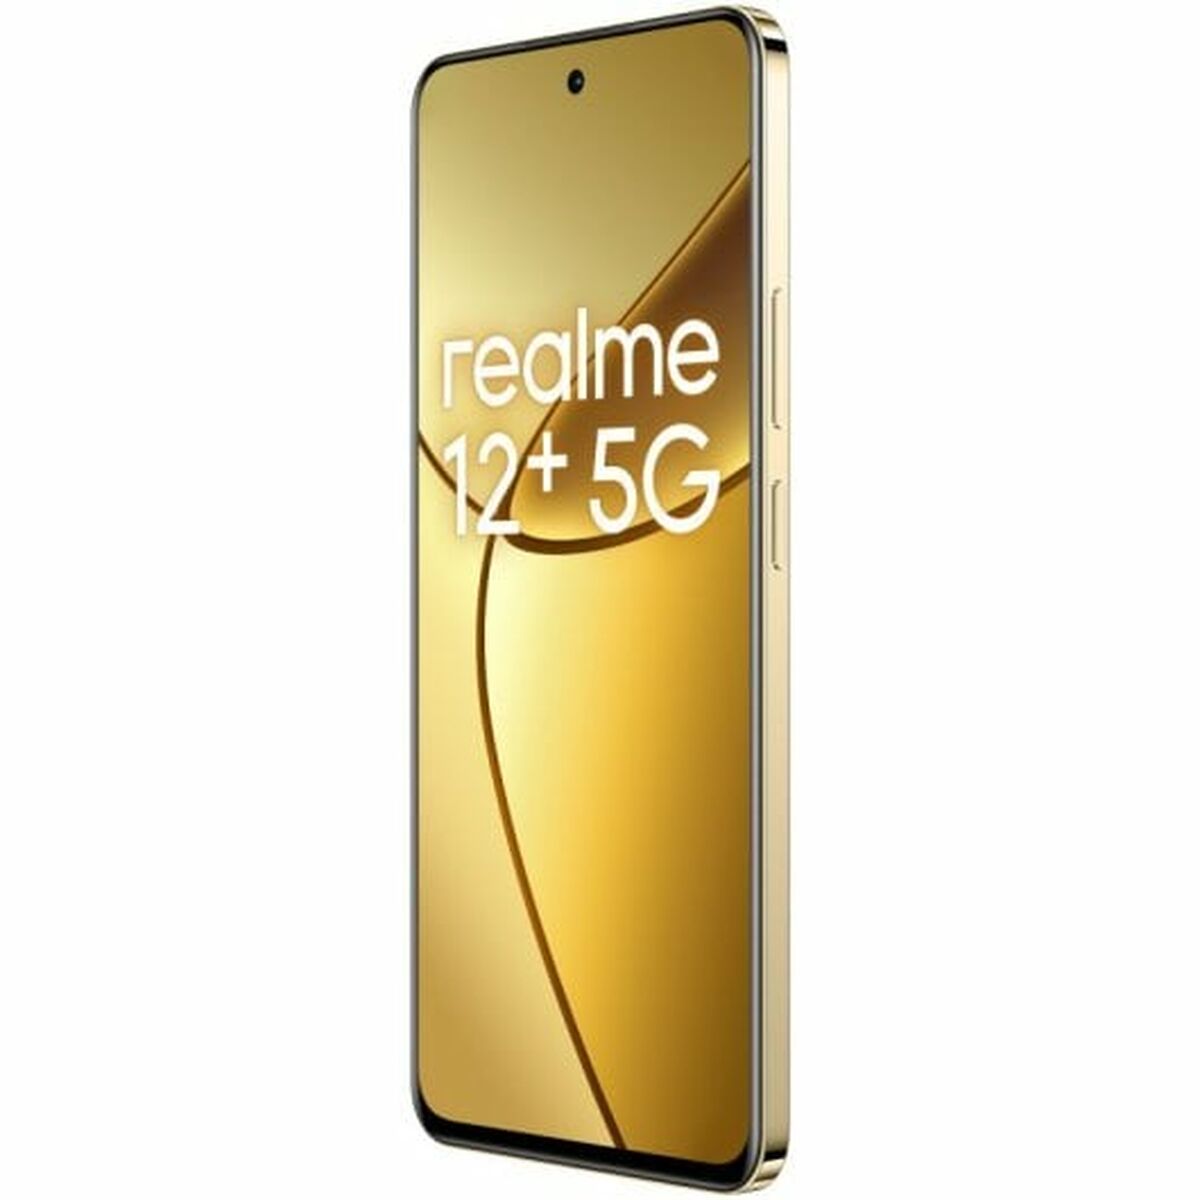 Smartphone Realme 12 PLS 5G 12-512 BG Octa Core 12 GB RAM 512 GB Beige - CA International  